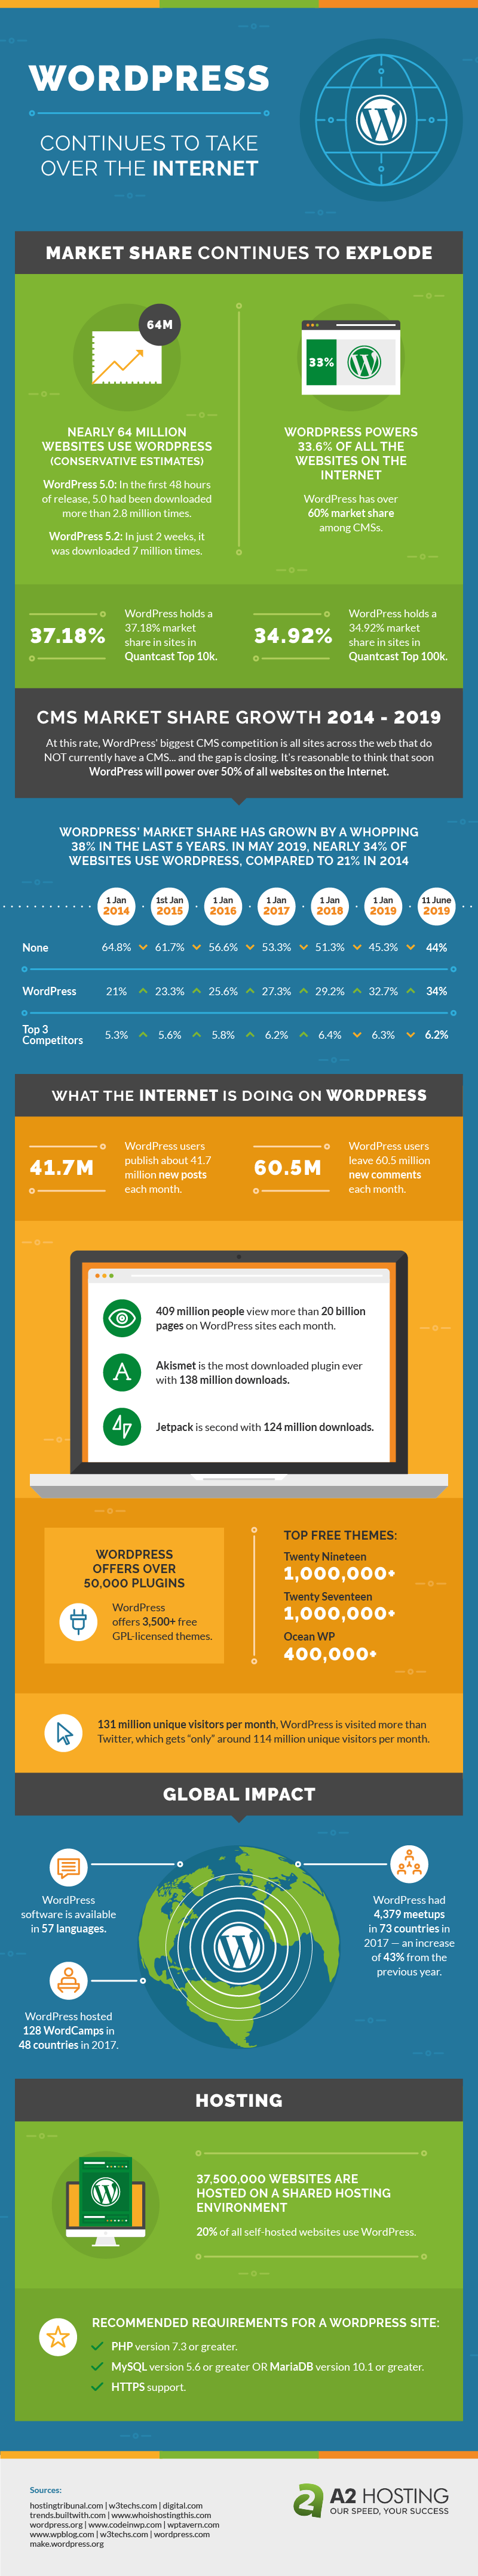 wordpress infographic